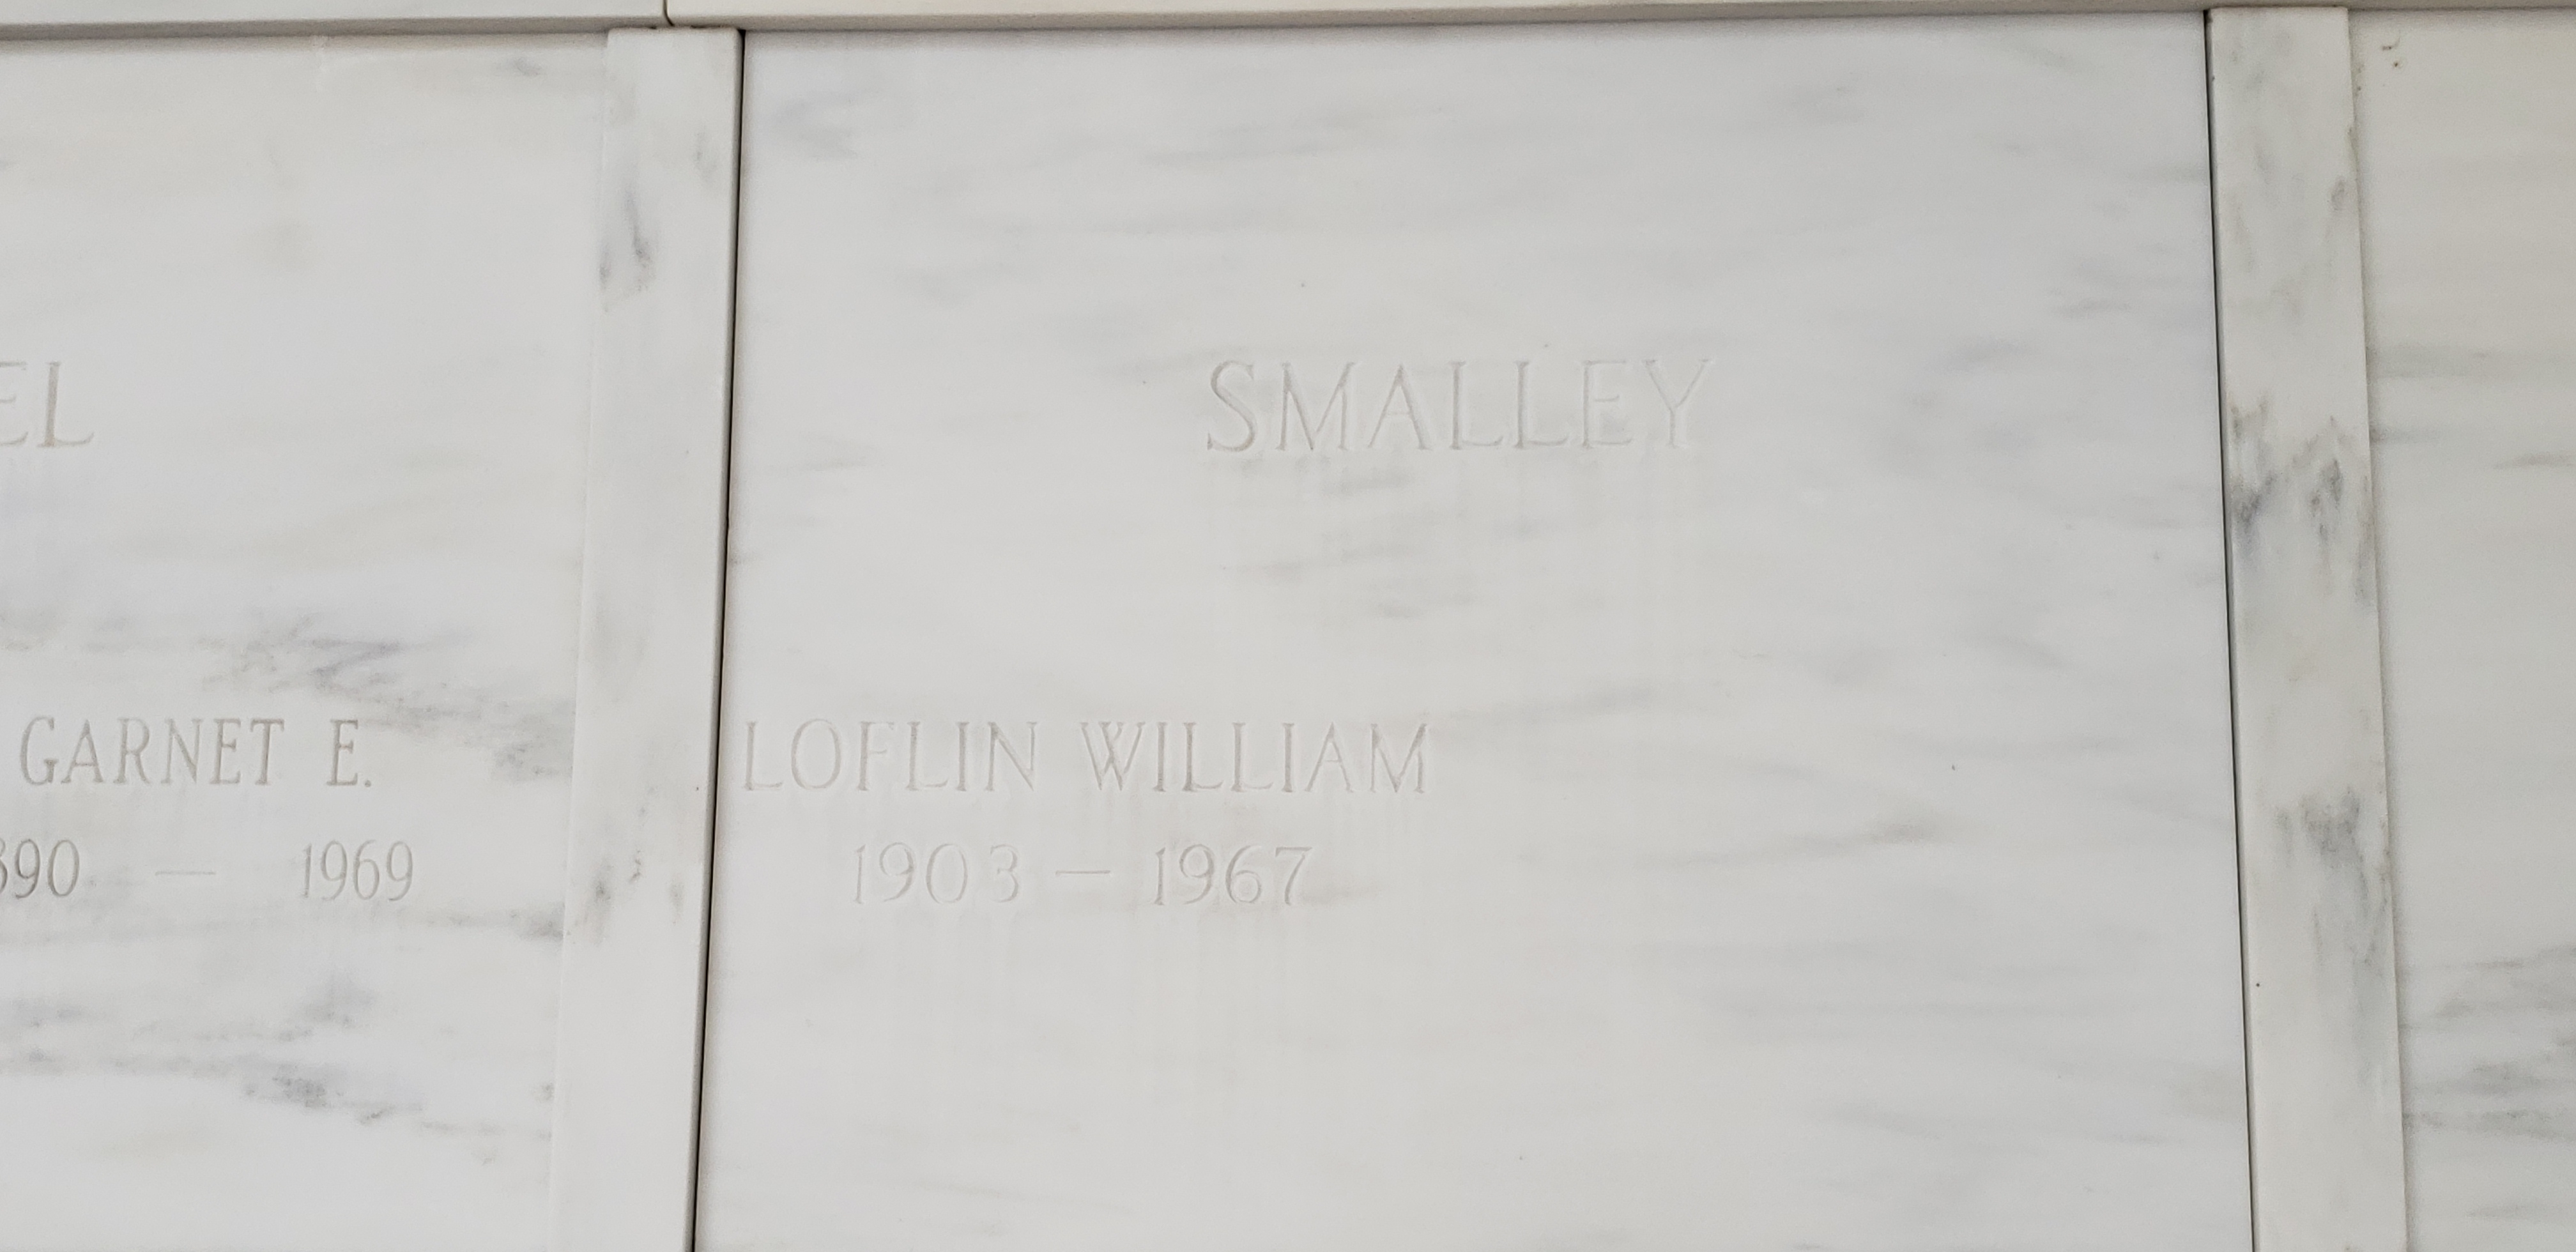 Loflin William Smalley